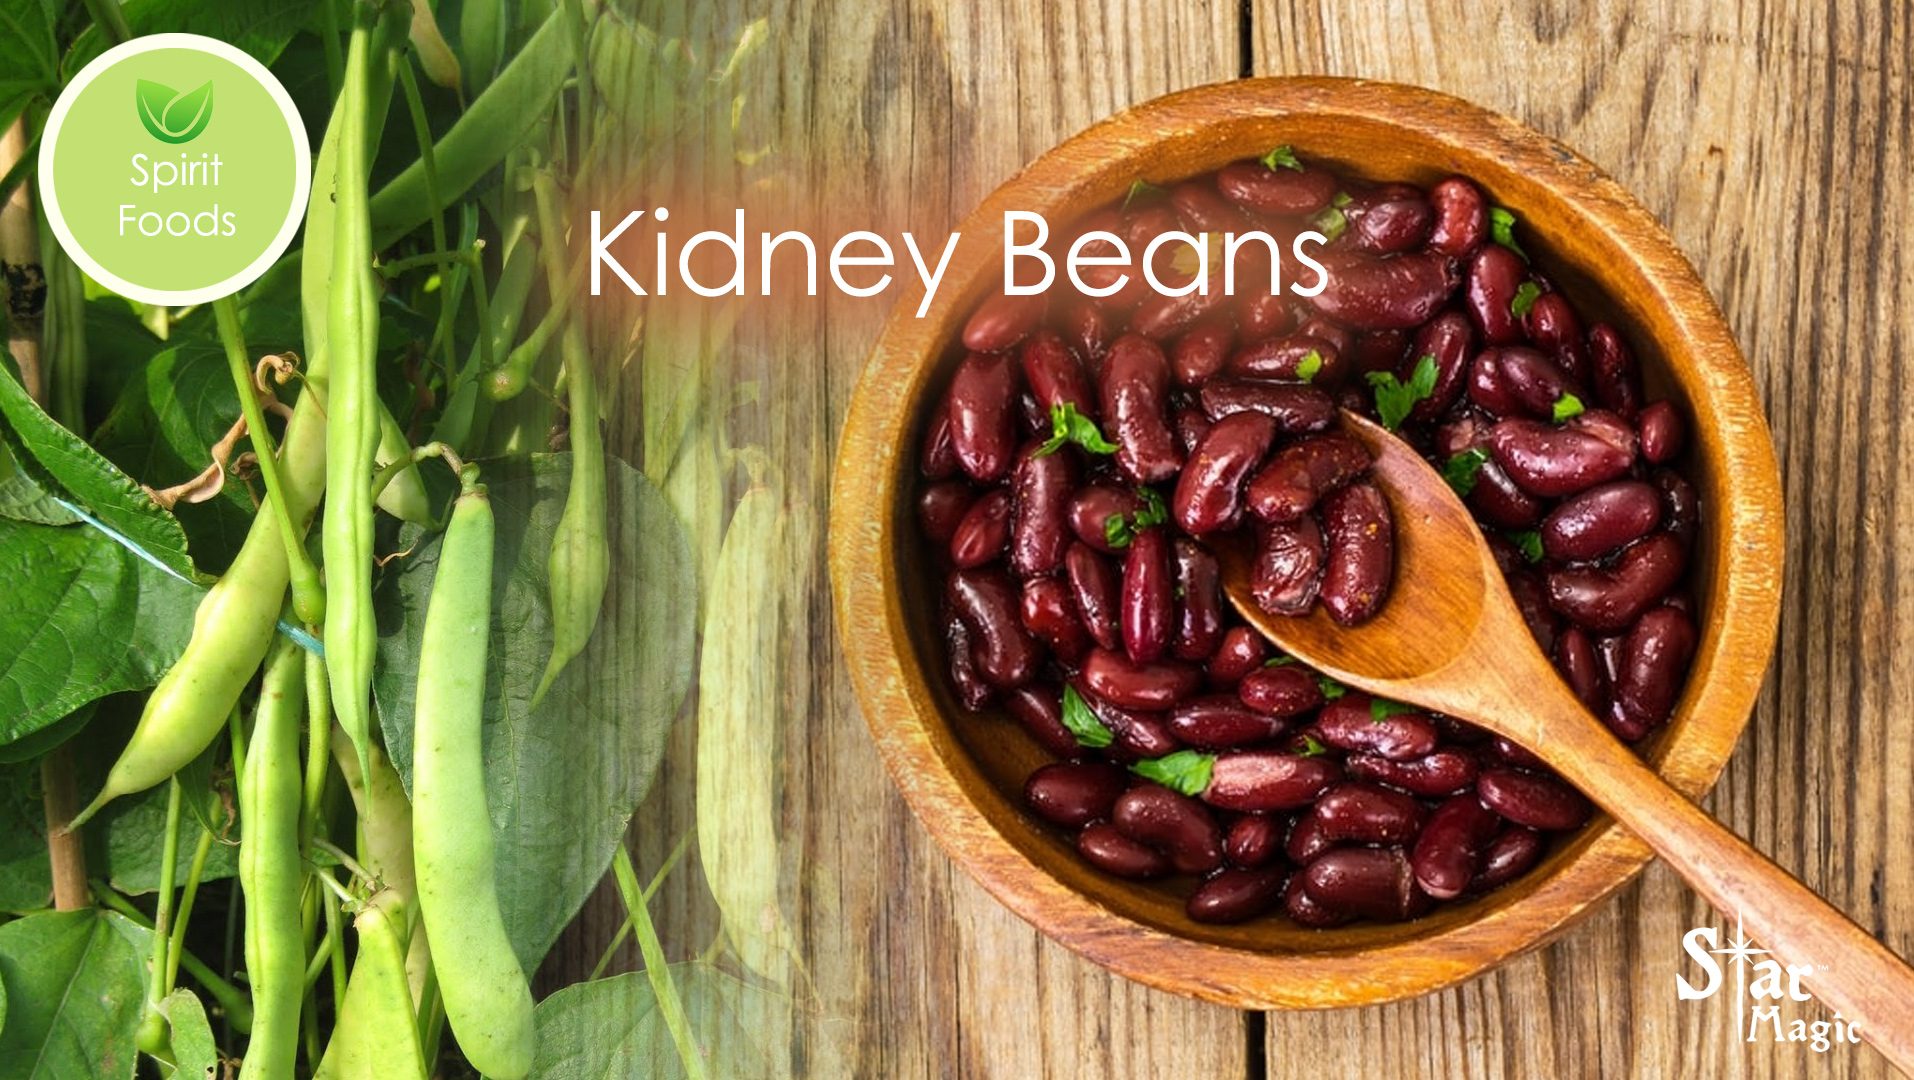 Spirit Food Kidney Beans